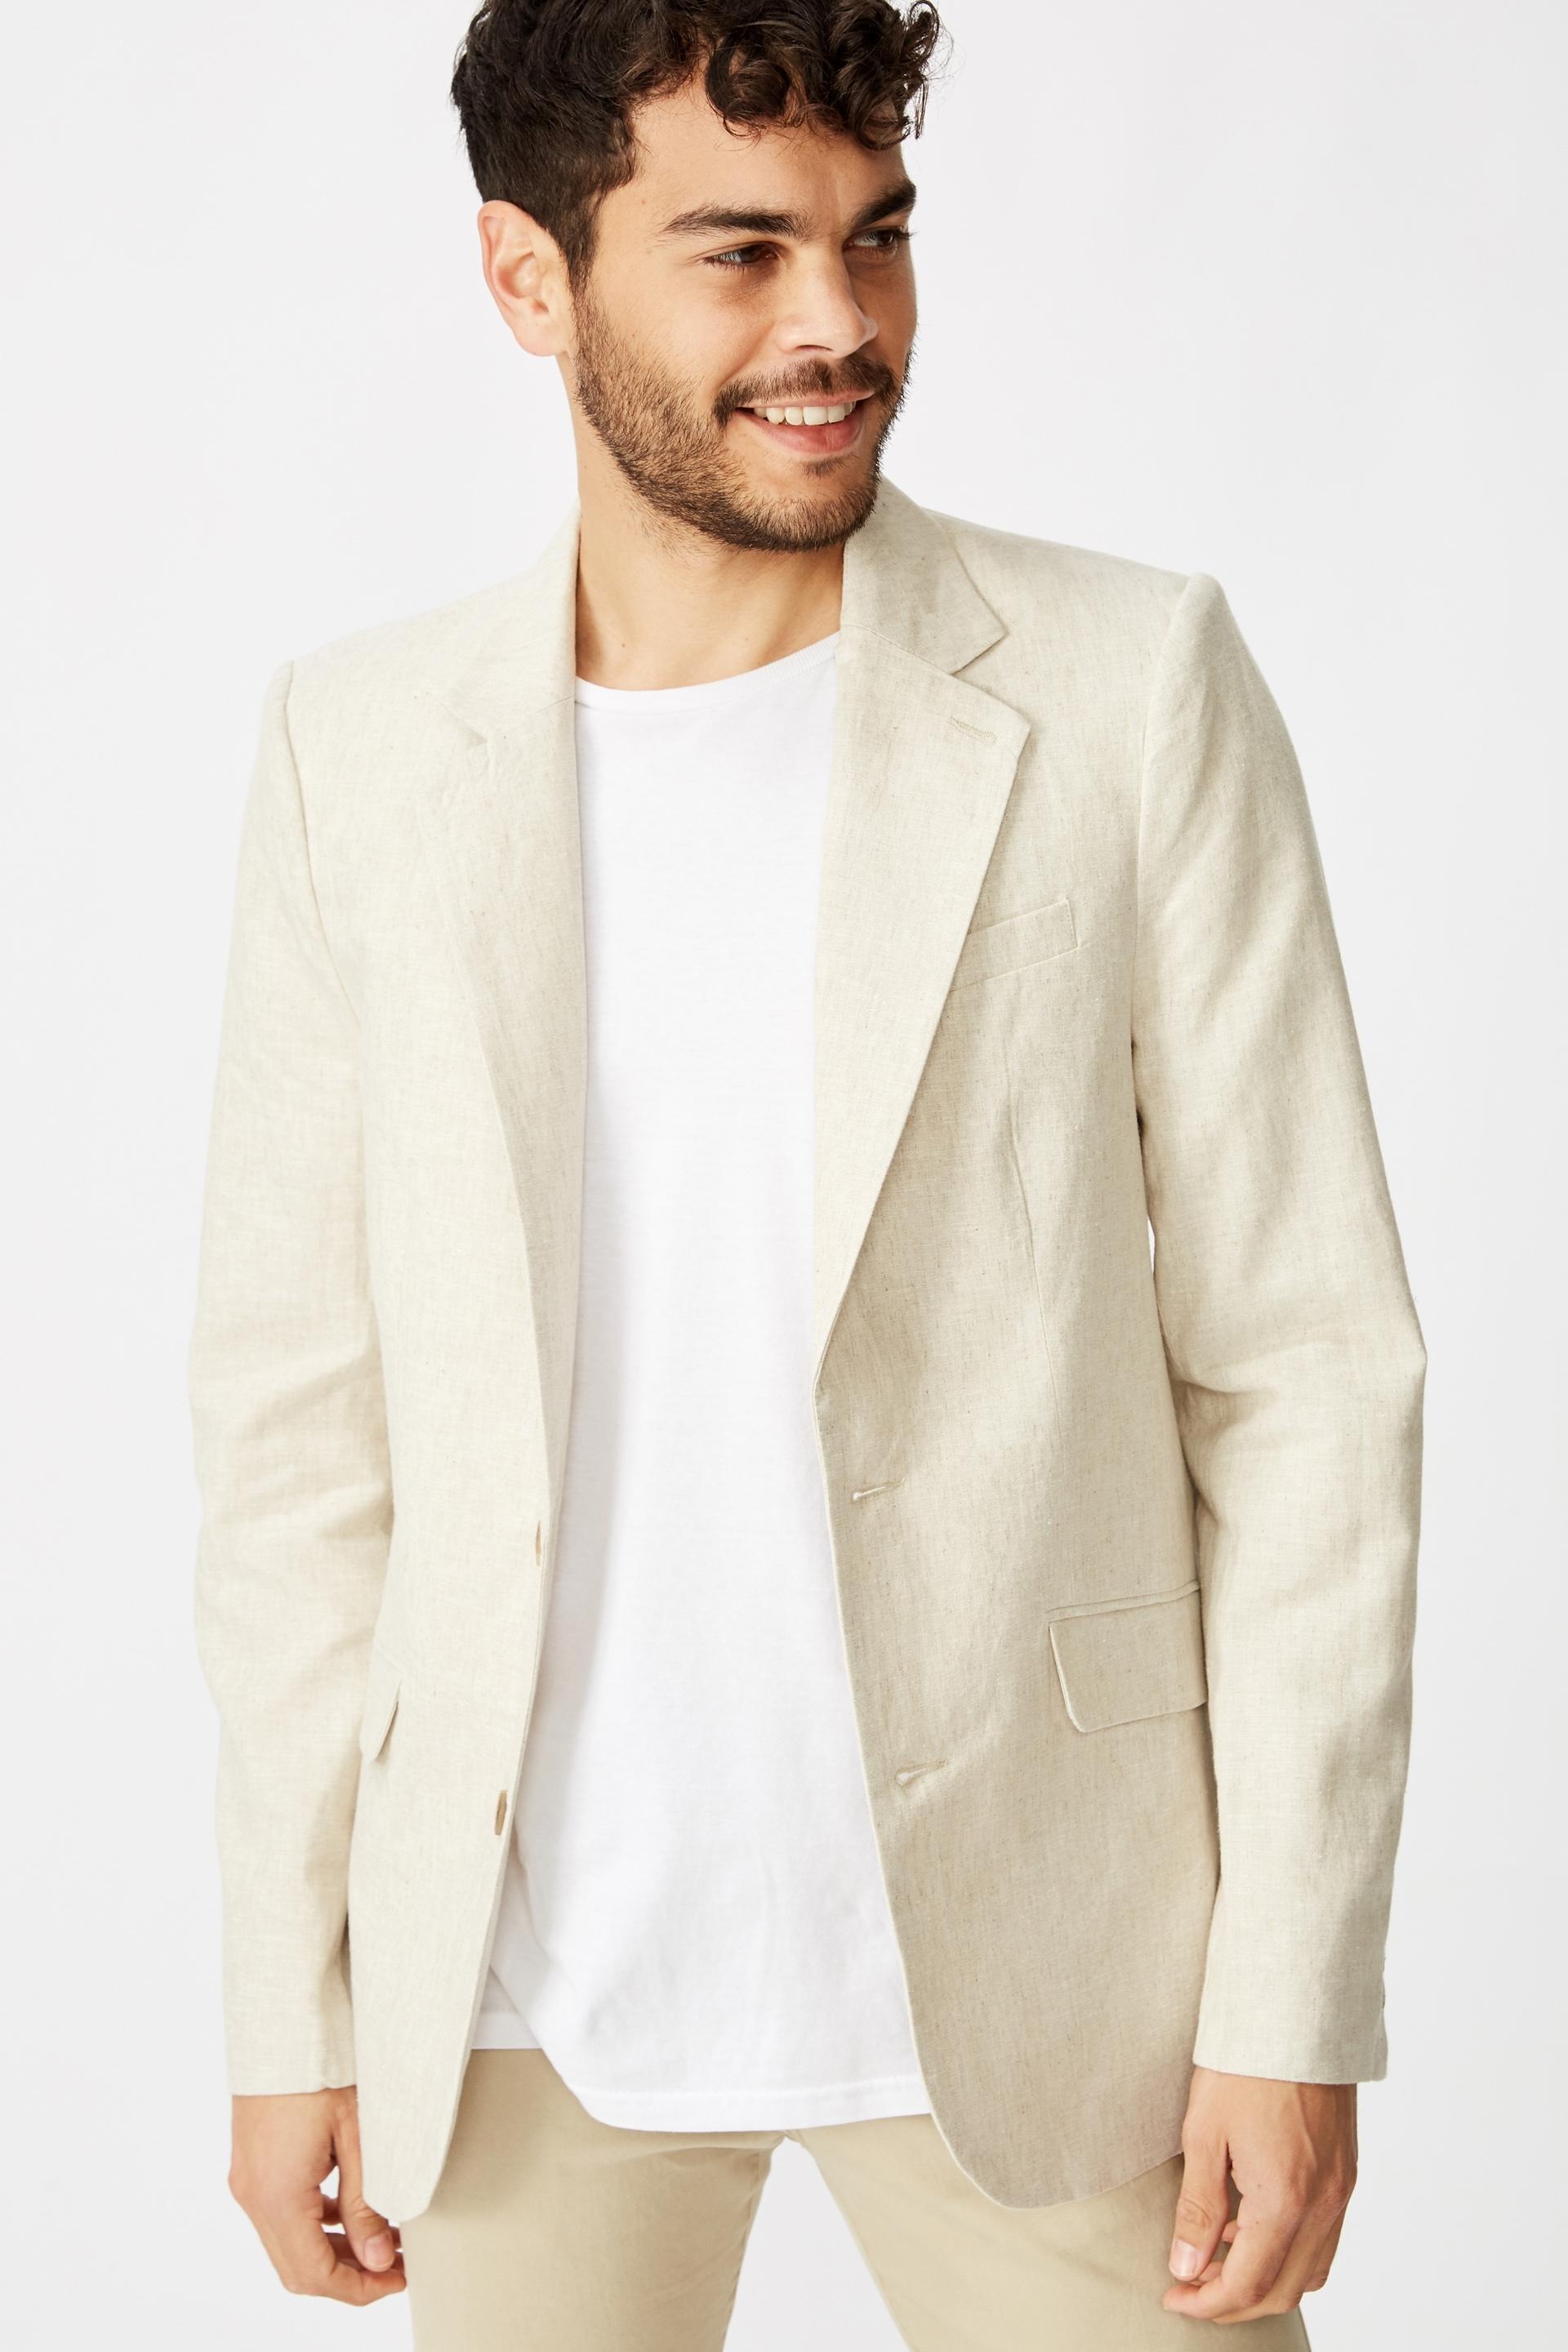 Linen blazer - oatmeal Cotton On Jackets | Superbalist.com